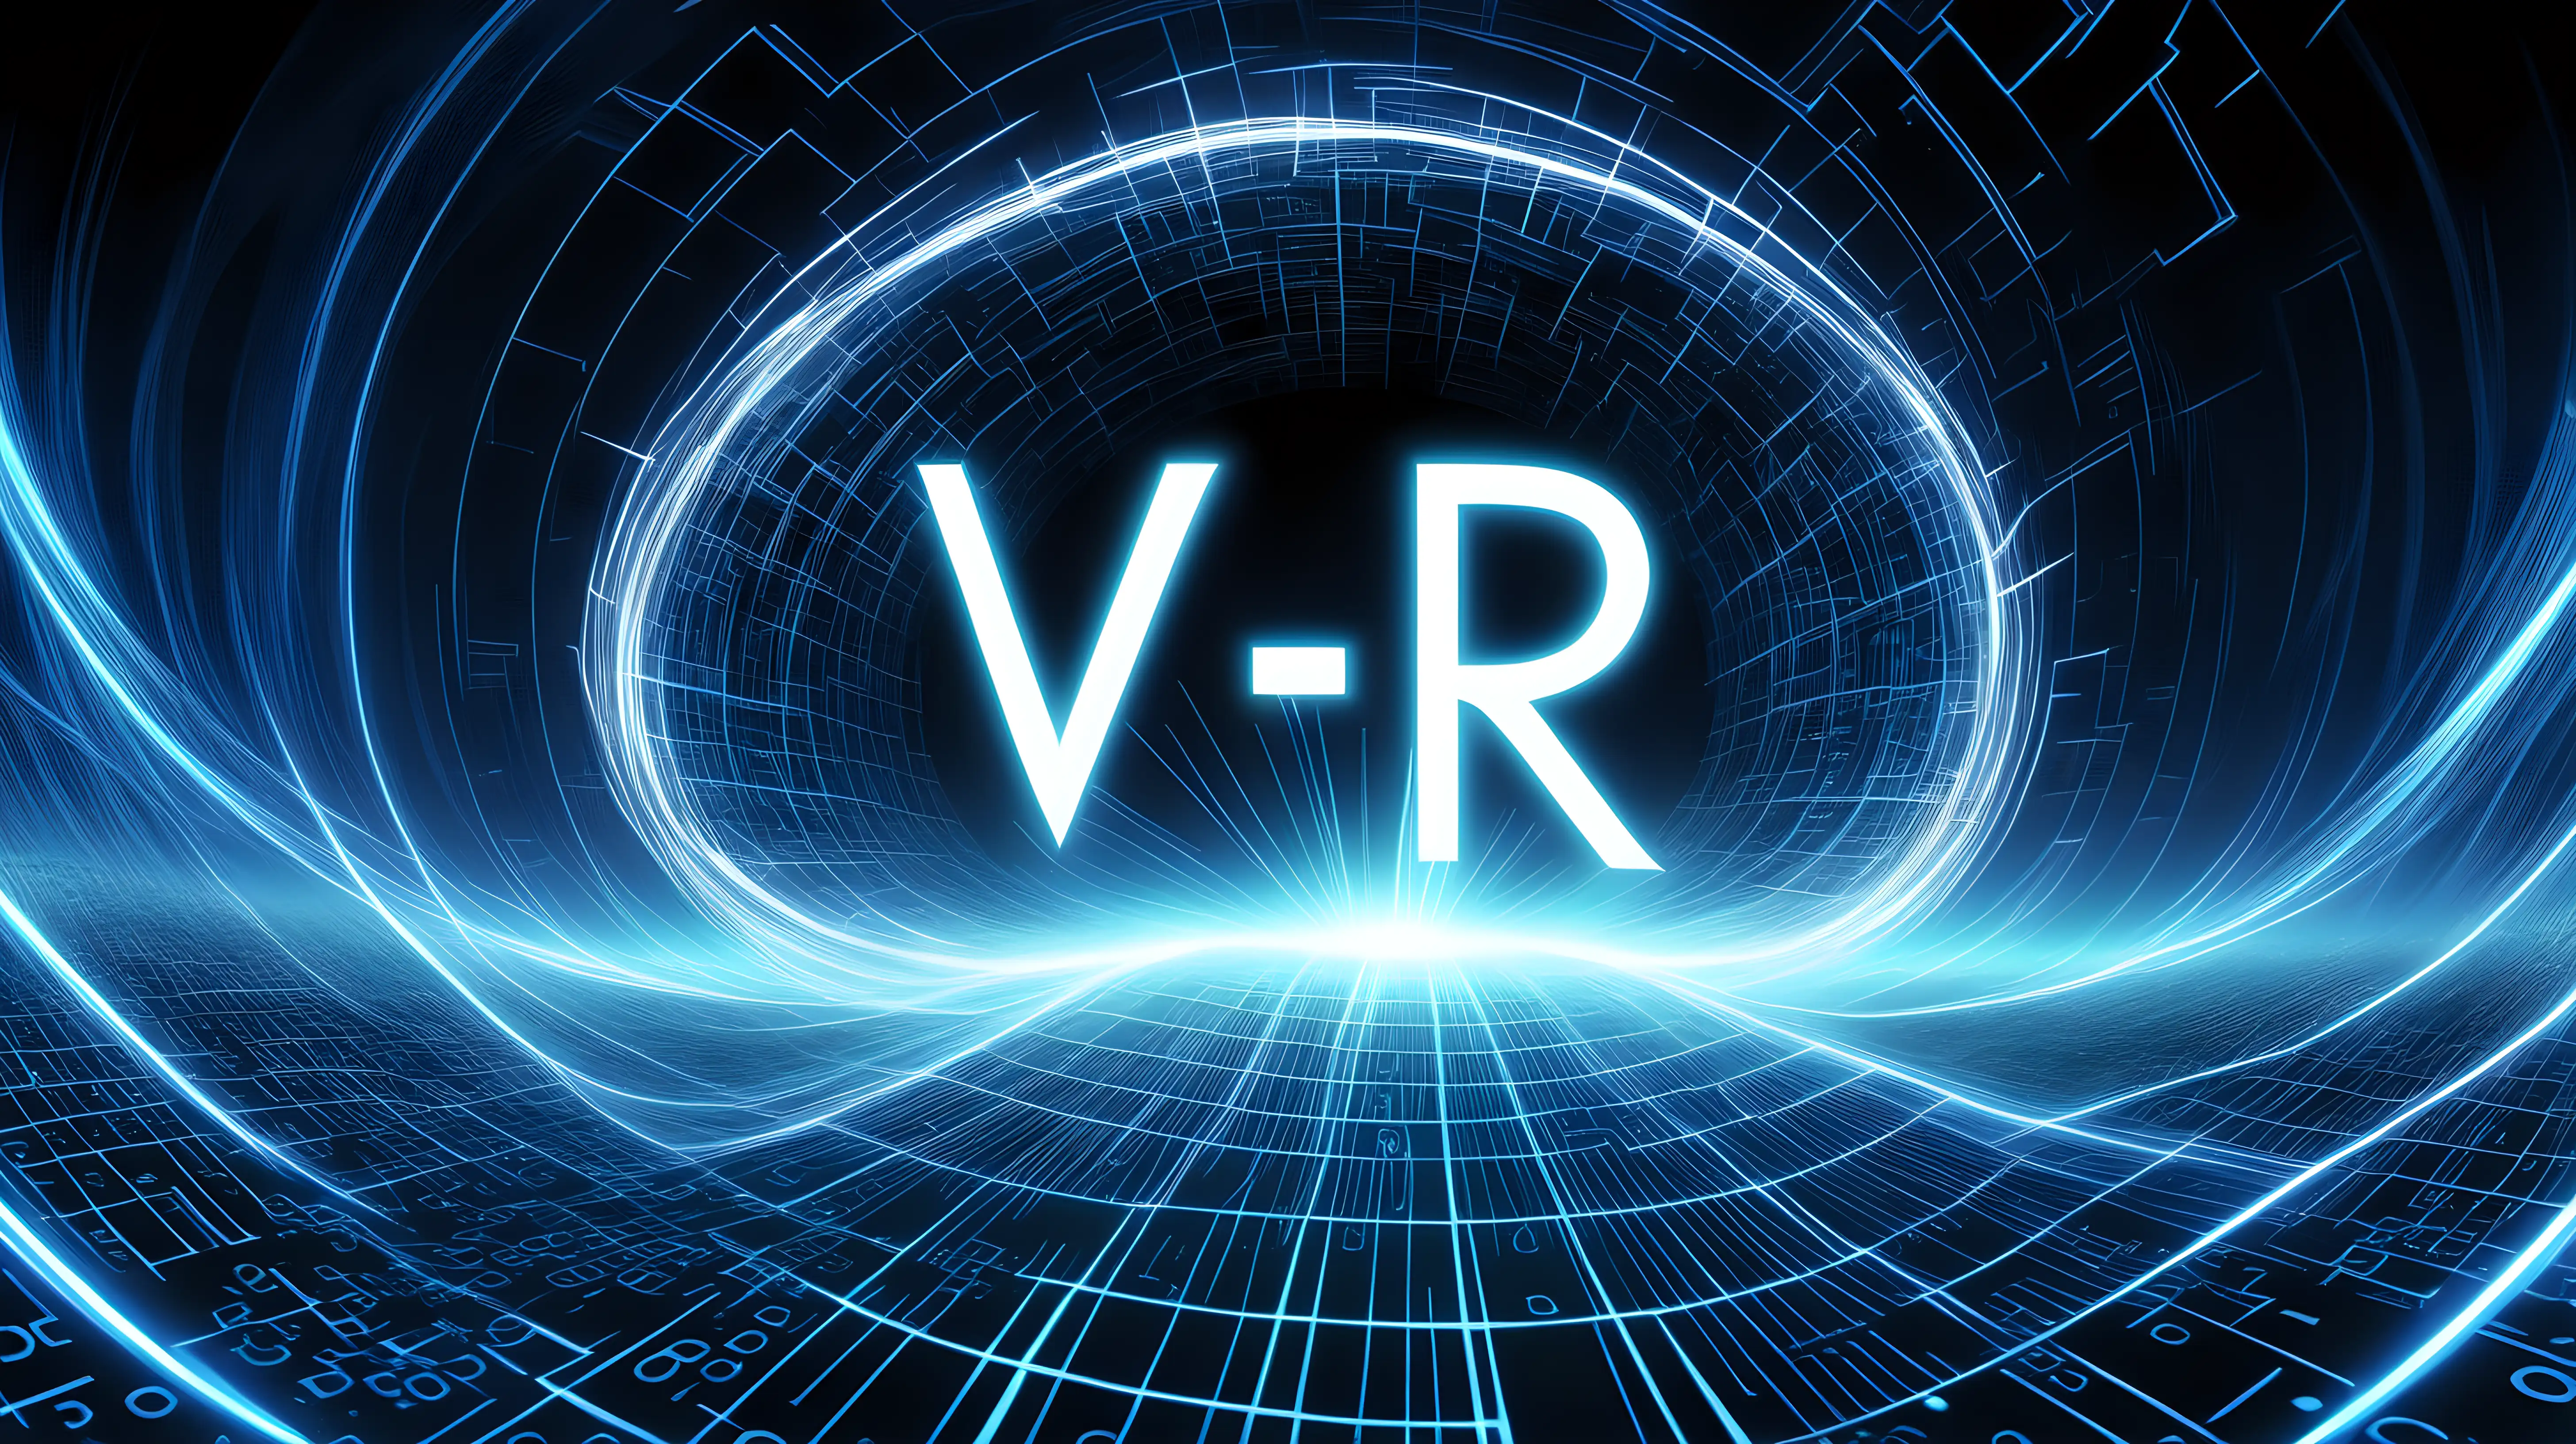 Binary VR Code Amidst Glowing Data Streams